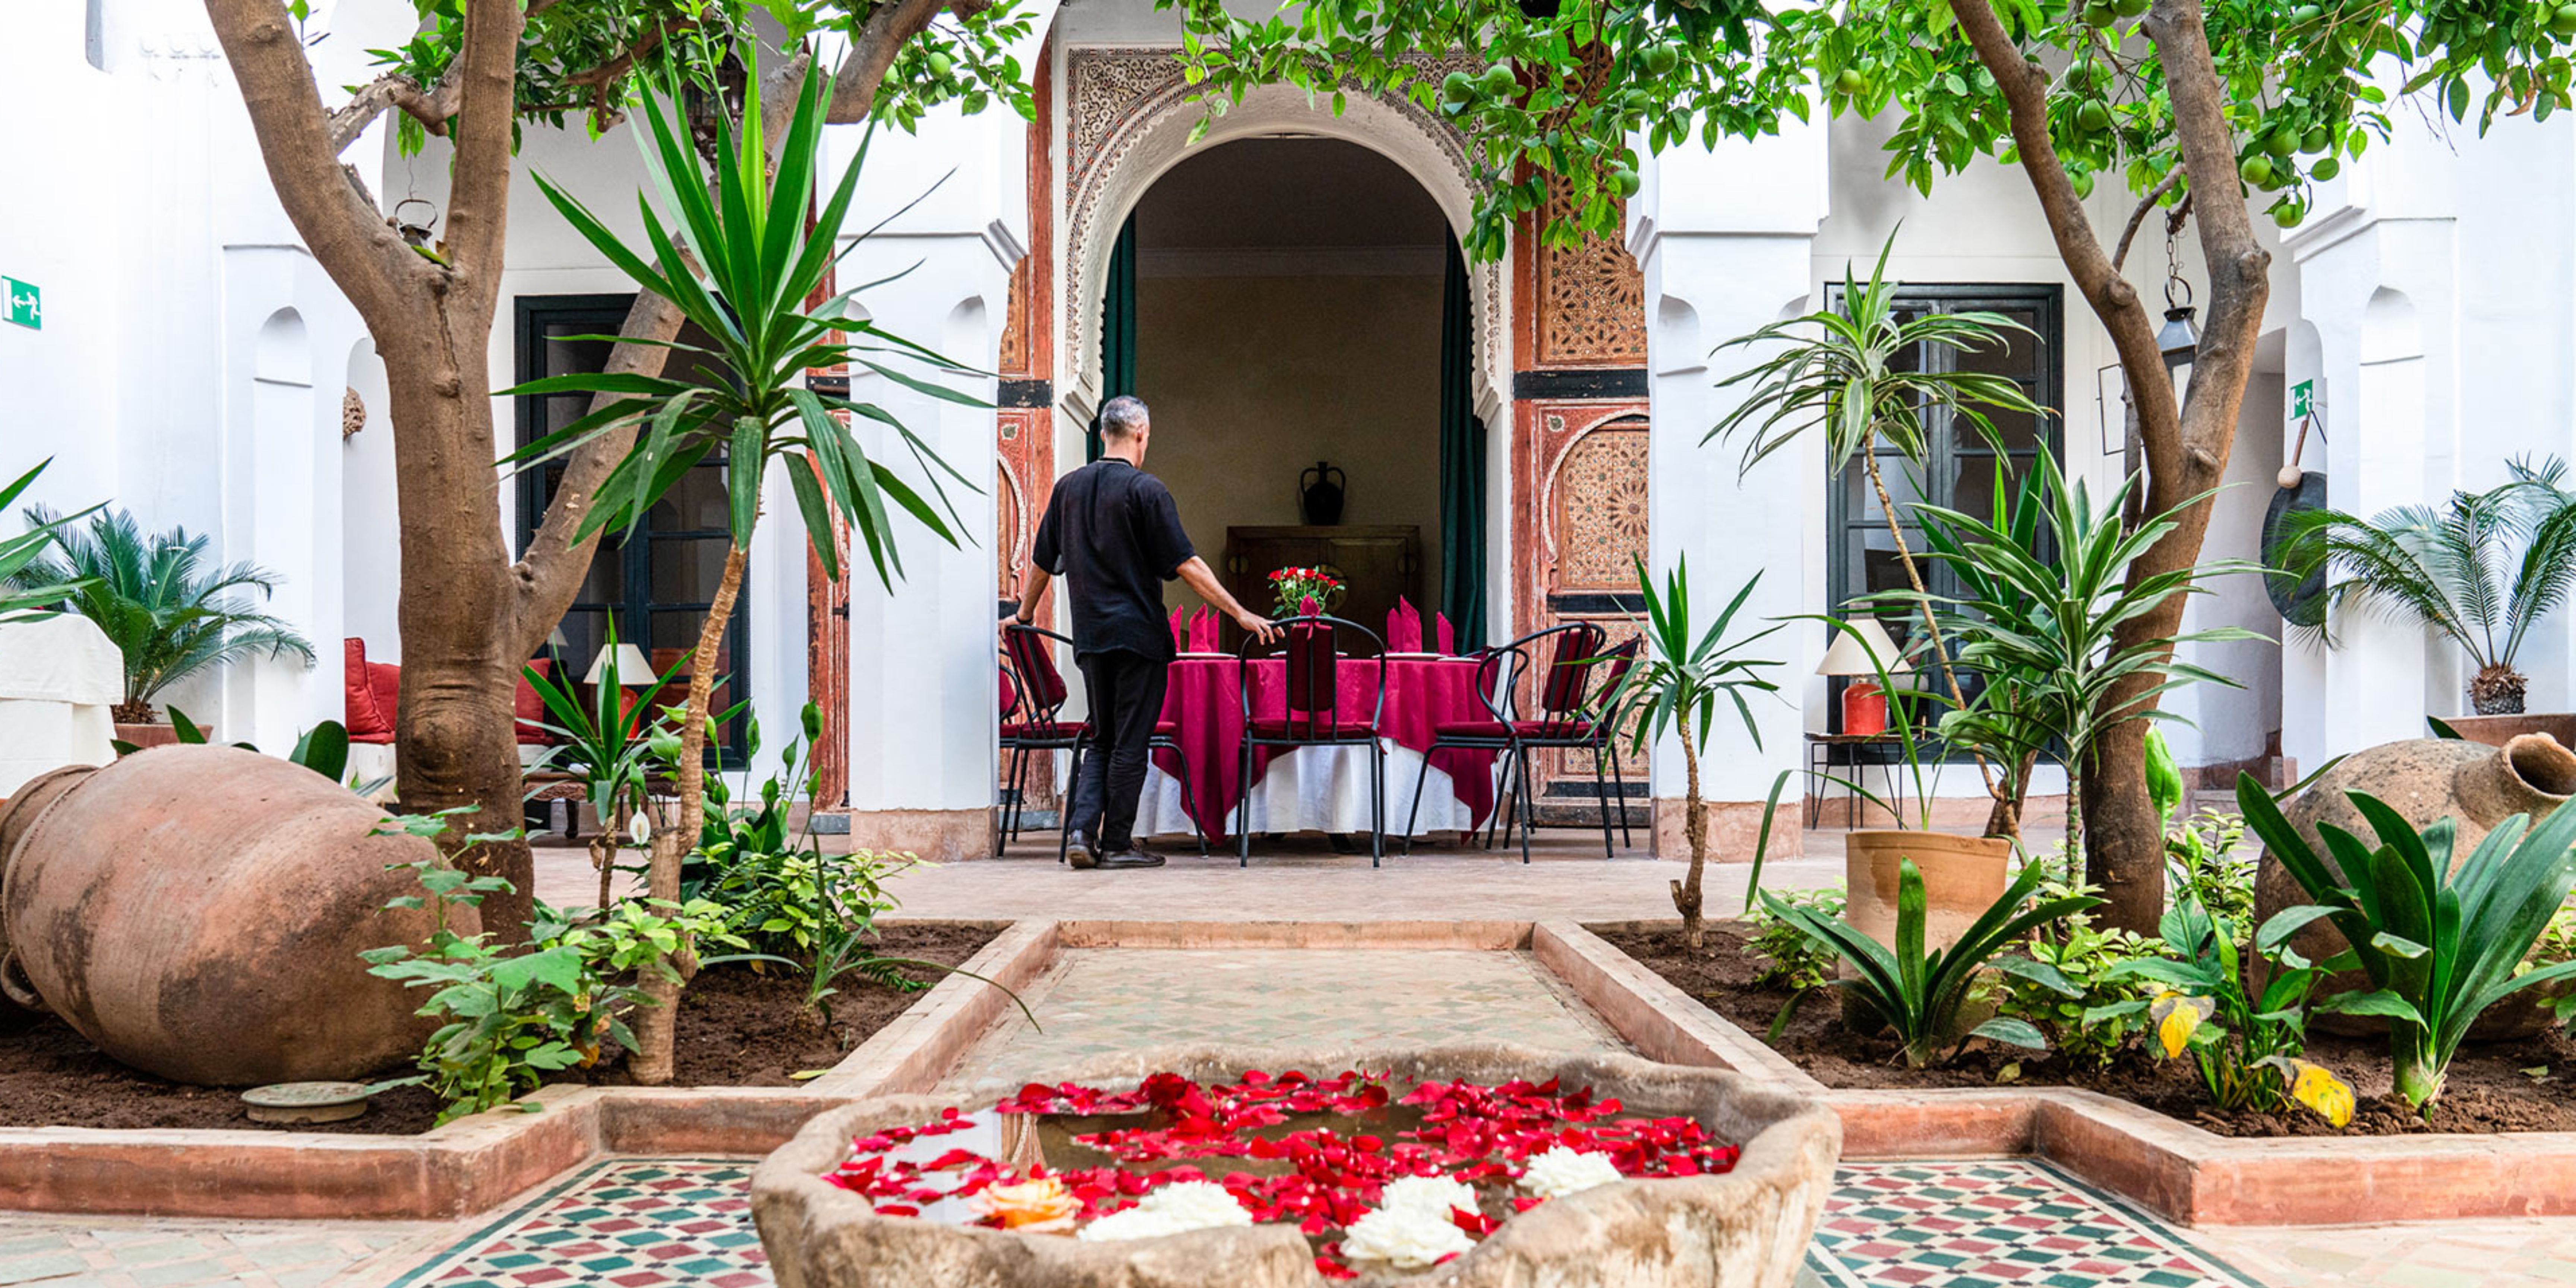 Le patio de l'immense riad de la Médina de Marrakech